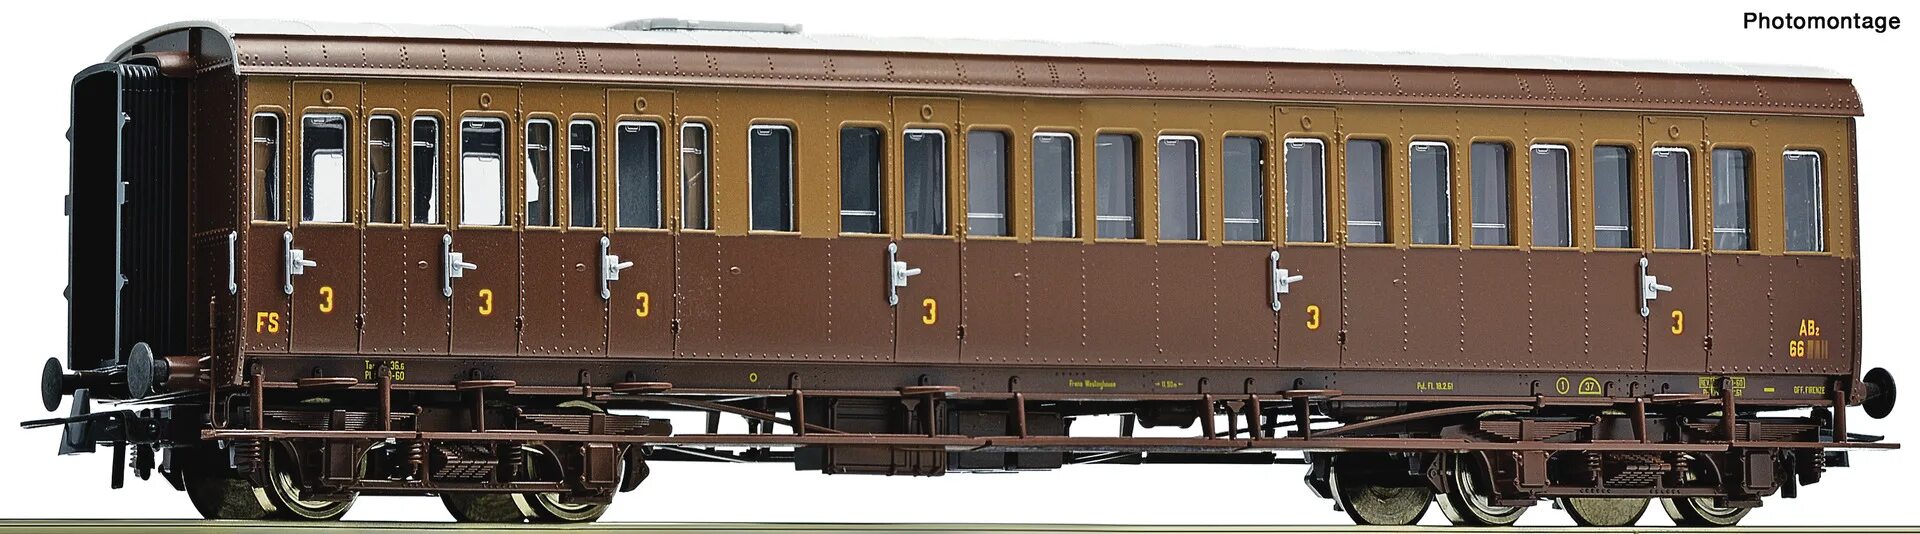 Roco пассажирский вагон (1 и 2 класс), 45748, h0 (1:87). Коричневый пассажирский вагон Piko 8 окон. Вагон пассажирский Piko старый. Пассажирский купейный вагон Saxson Piko.